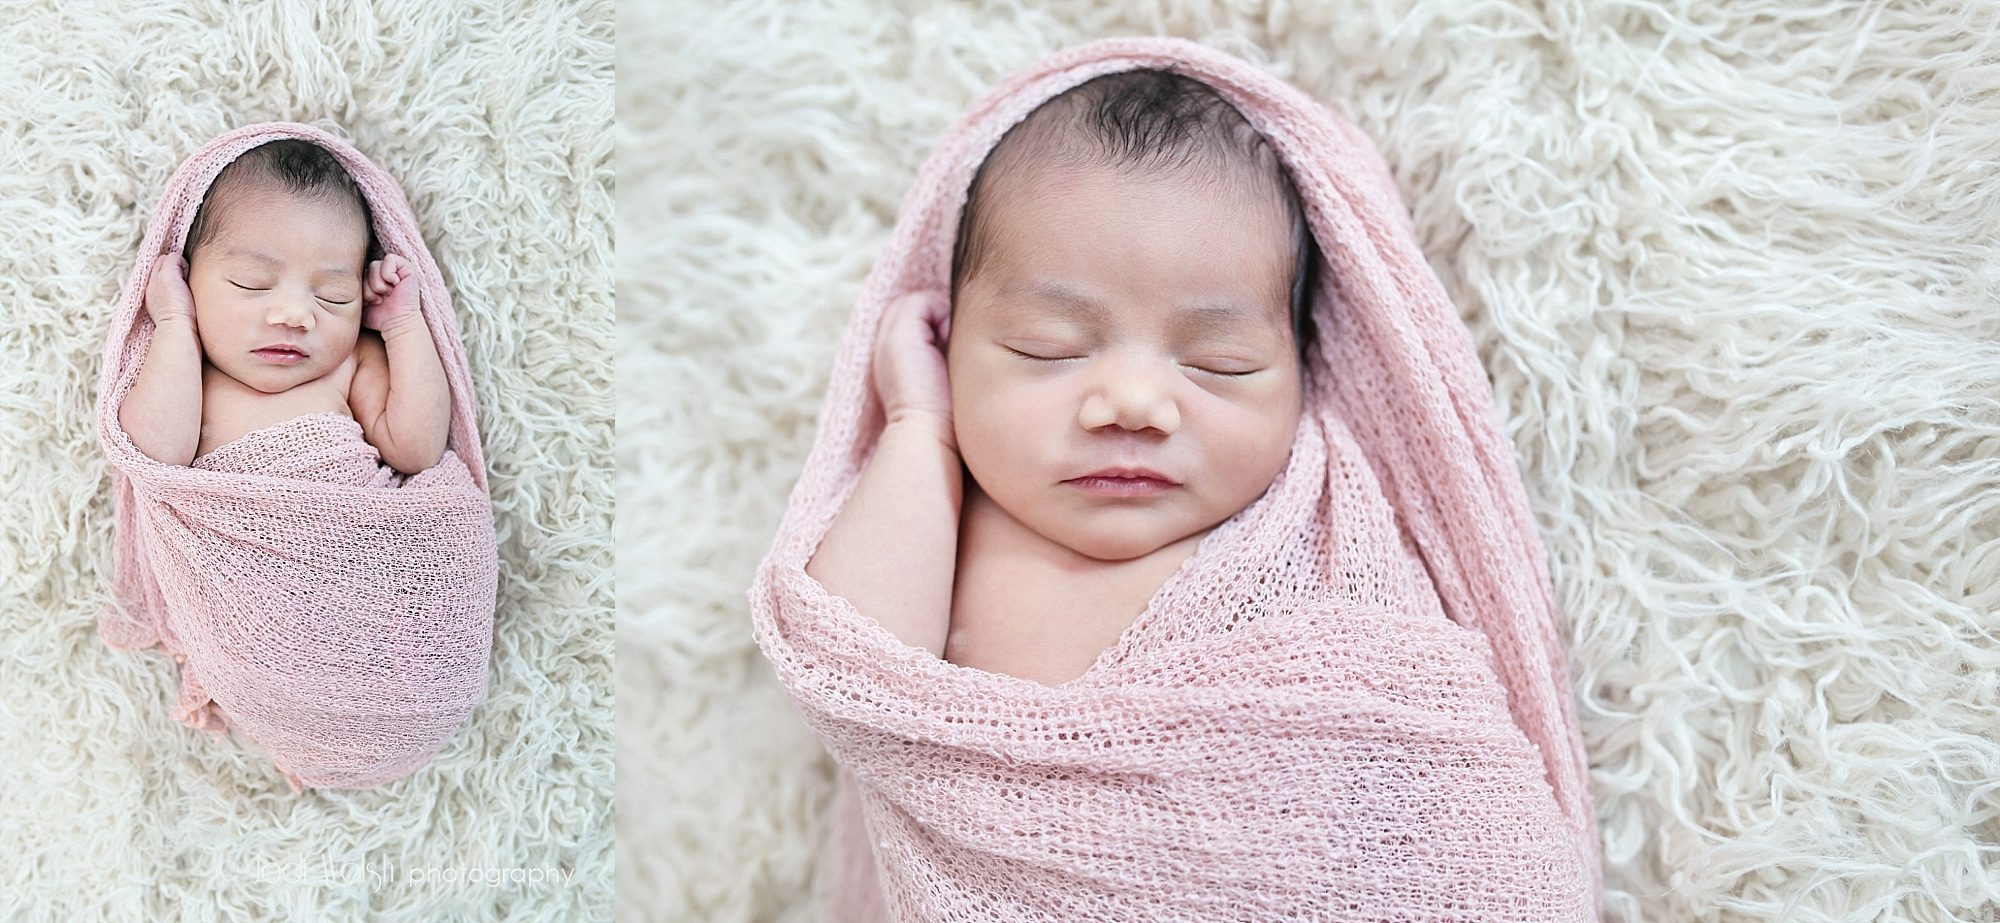 newborn baby girl with dark hair in a light pink wrap